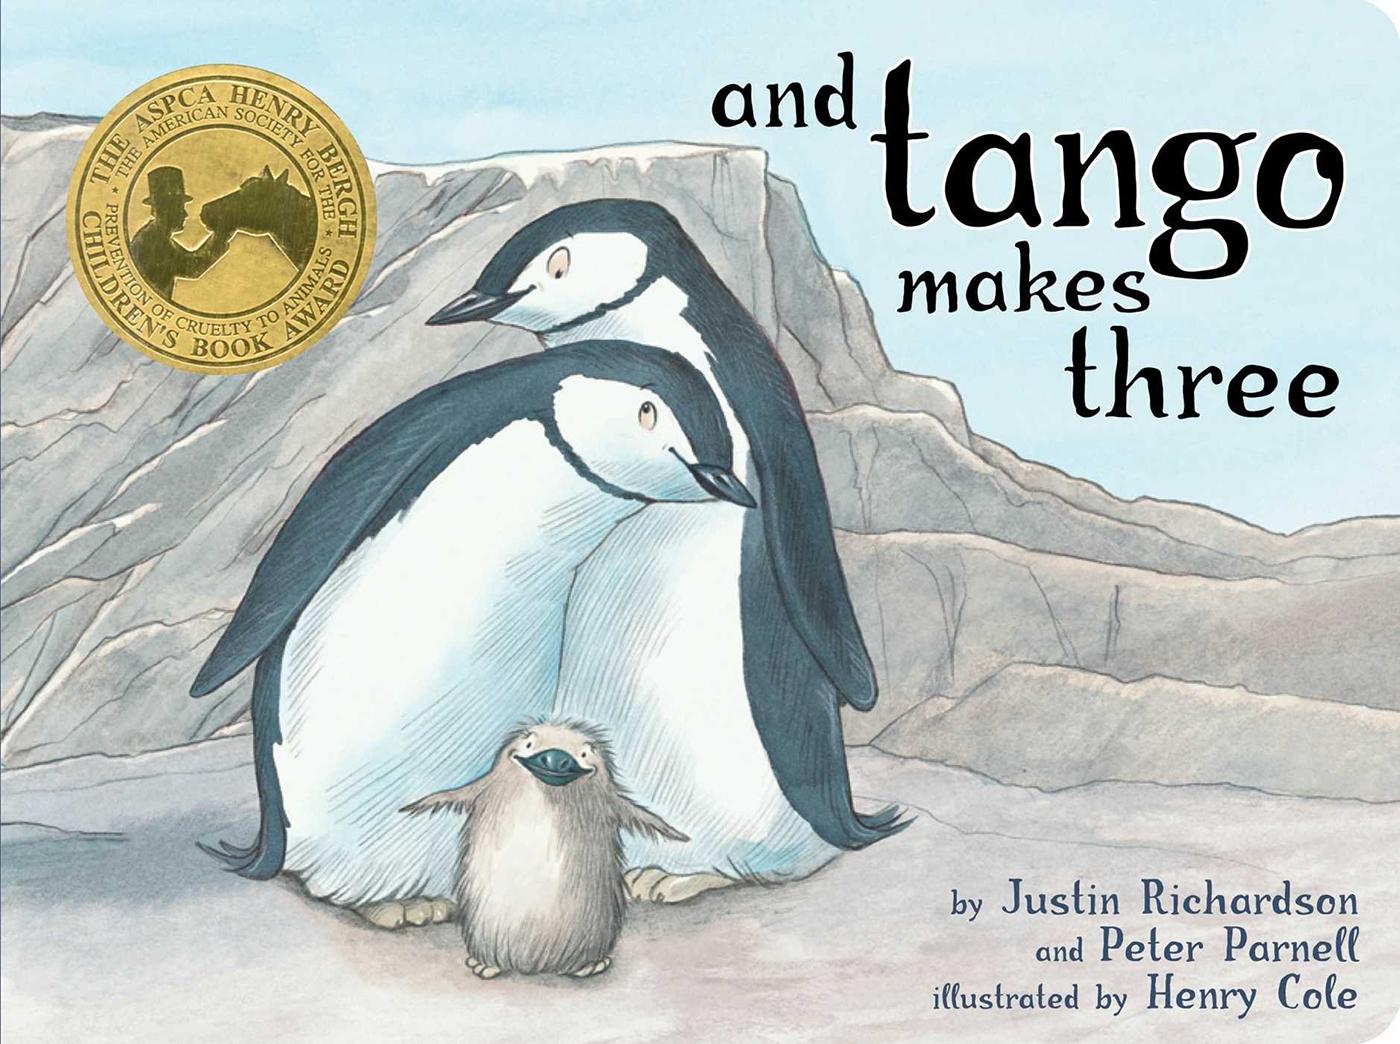 The book And Tango Makes Three